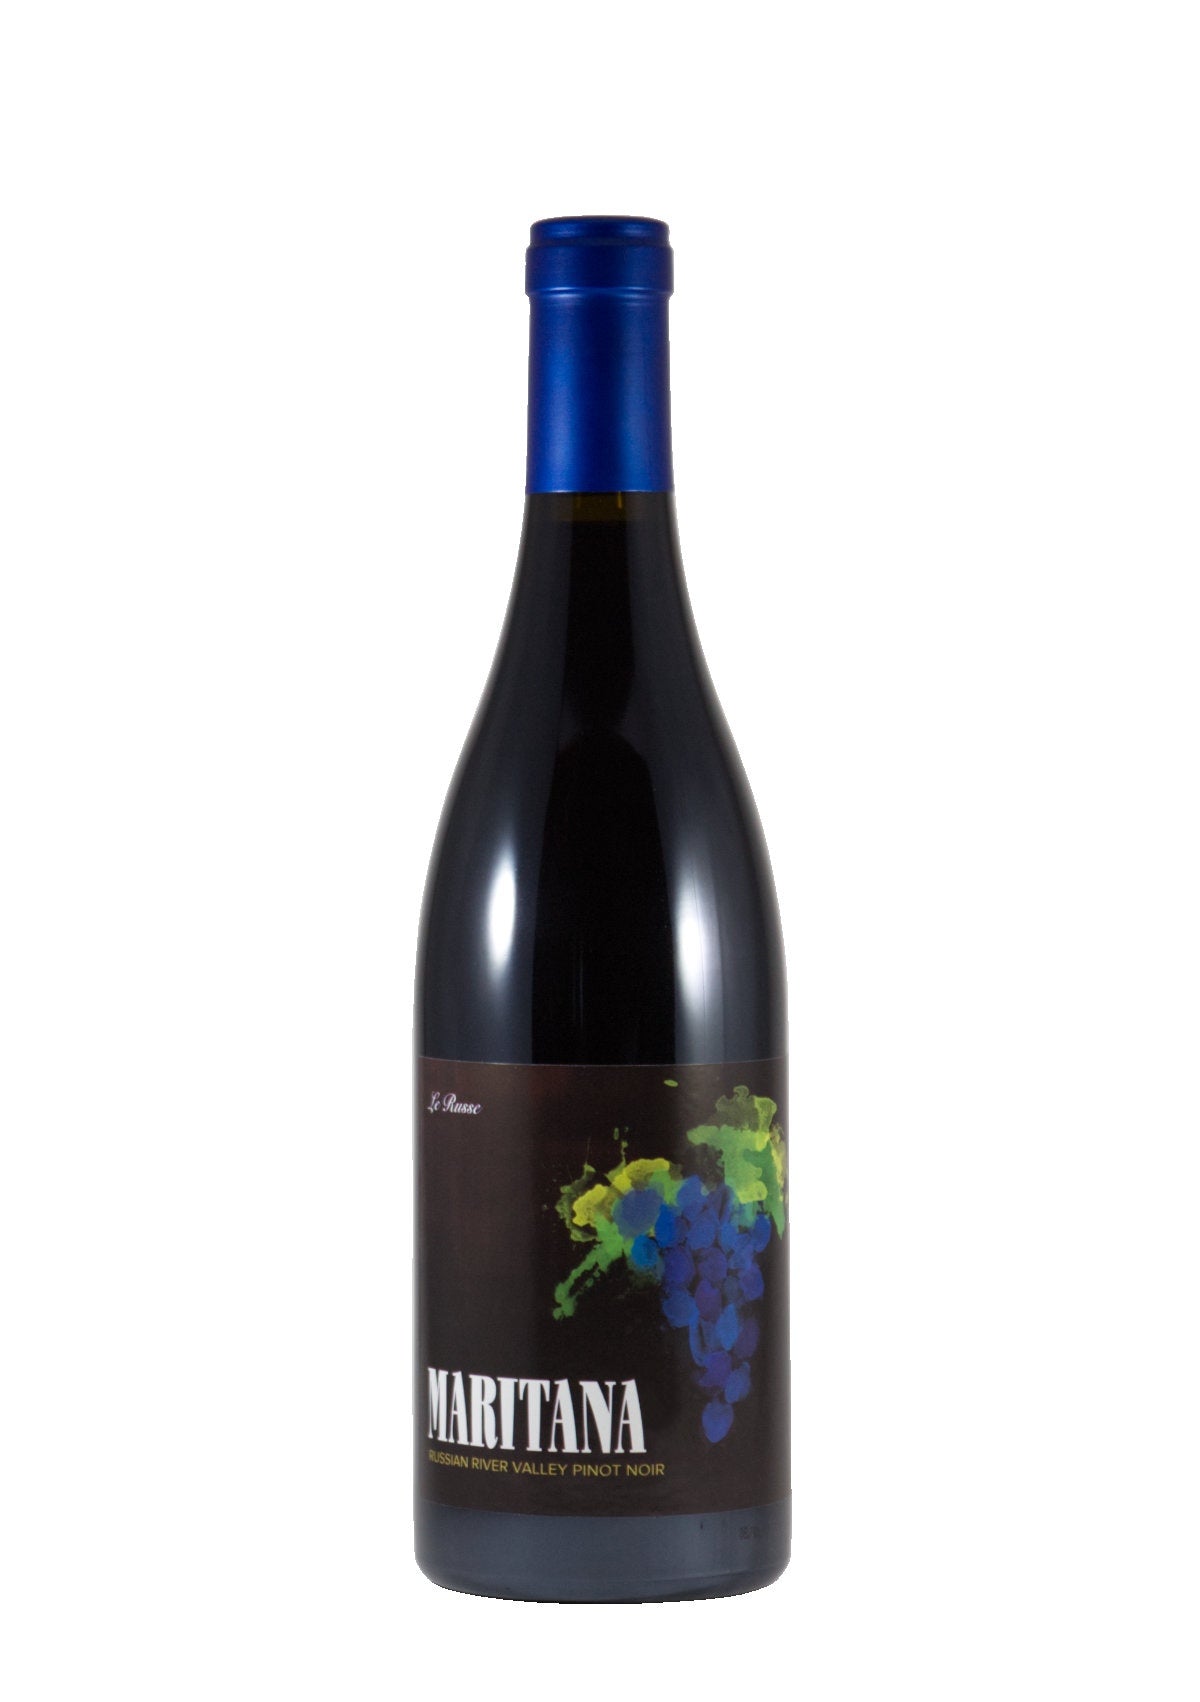 *4R* 2018 Maritana Vineyards "Le Russe" Pinot Noir (Russian River Valley, CA)